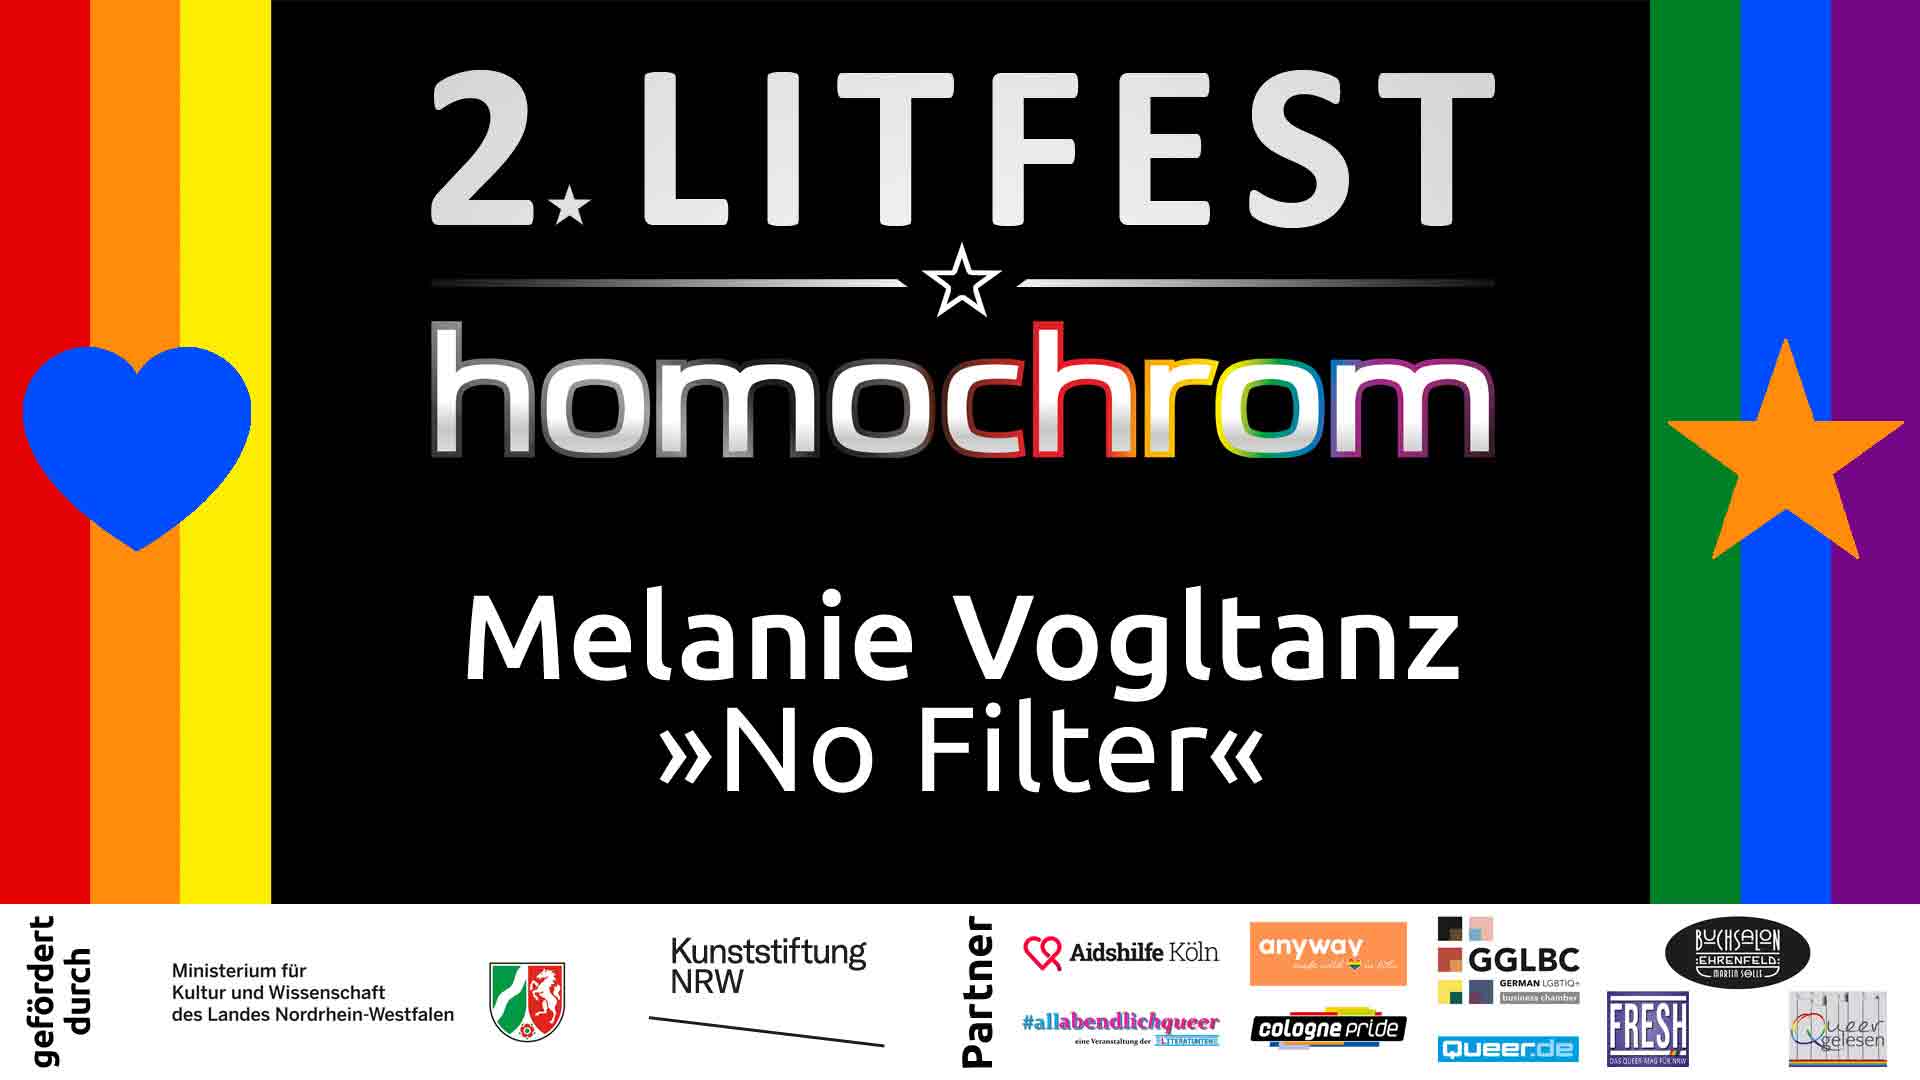 Youtube Video, Melanie Vogltanz, 2. Litfest homochrom